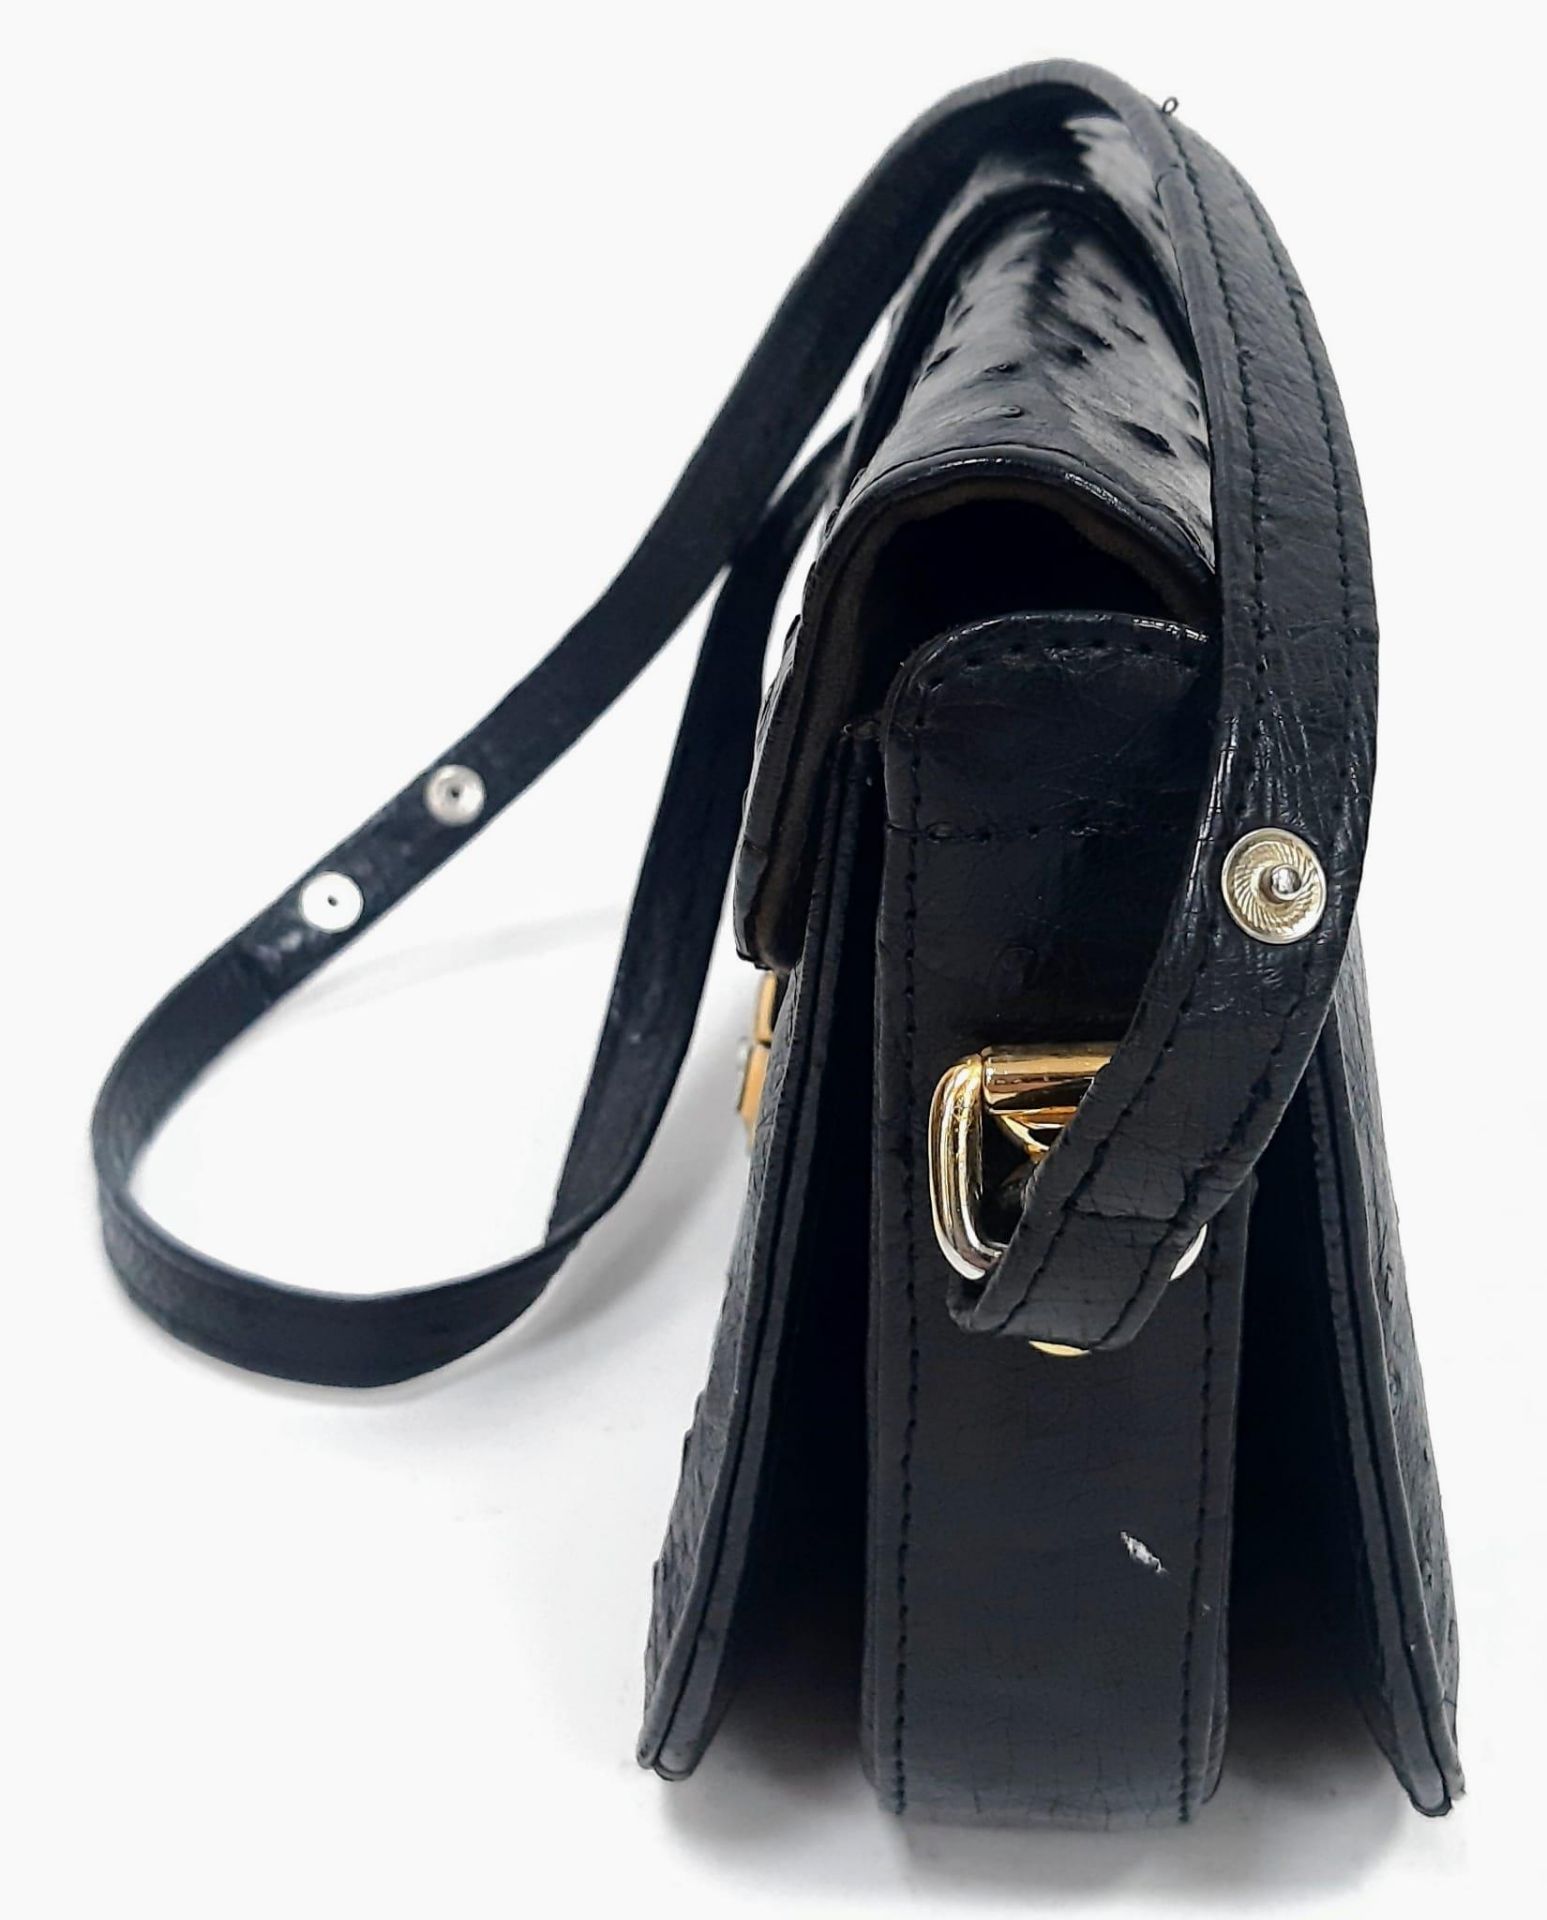 Vintage Corbeau Ostrich Leather Handbag. Circa 1970s, this wonderful handbag oozes elegance. - Image 6 of 13